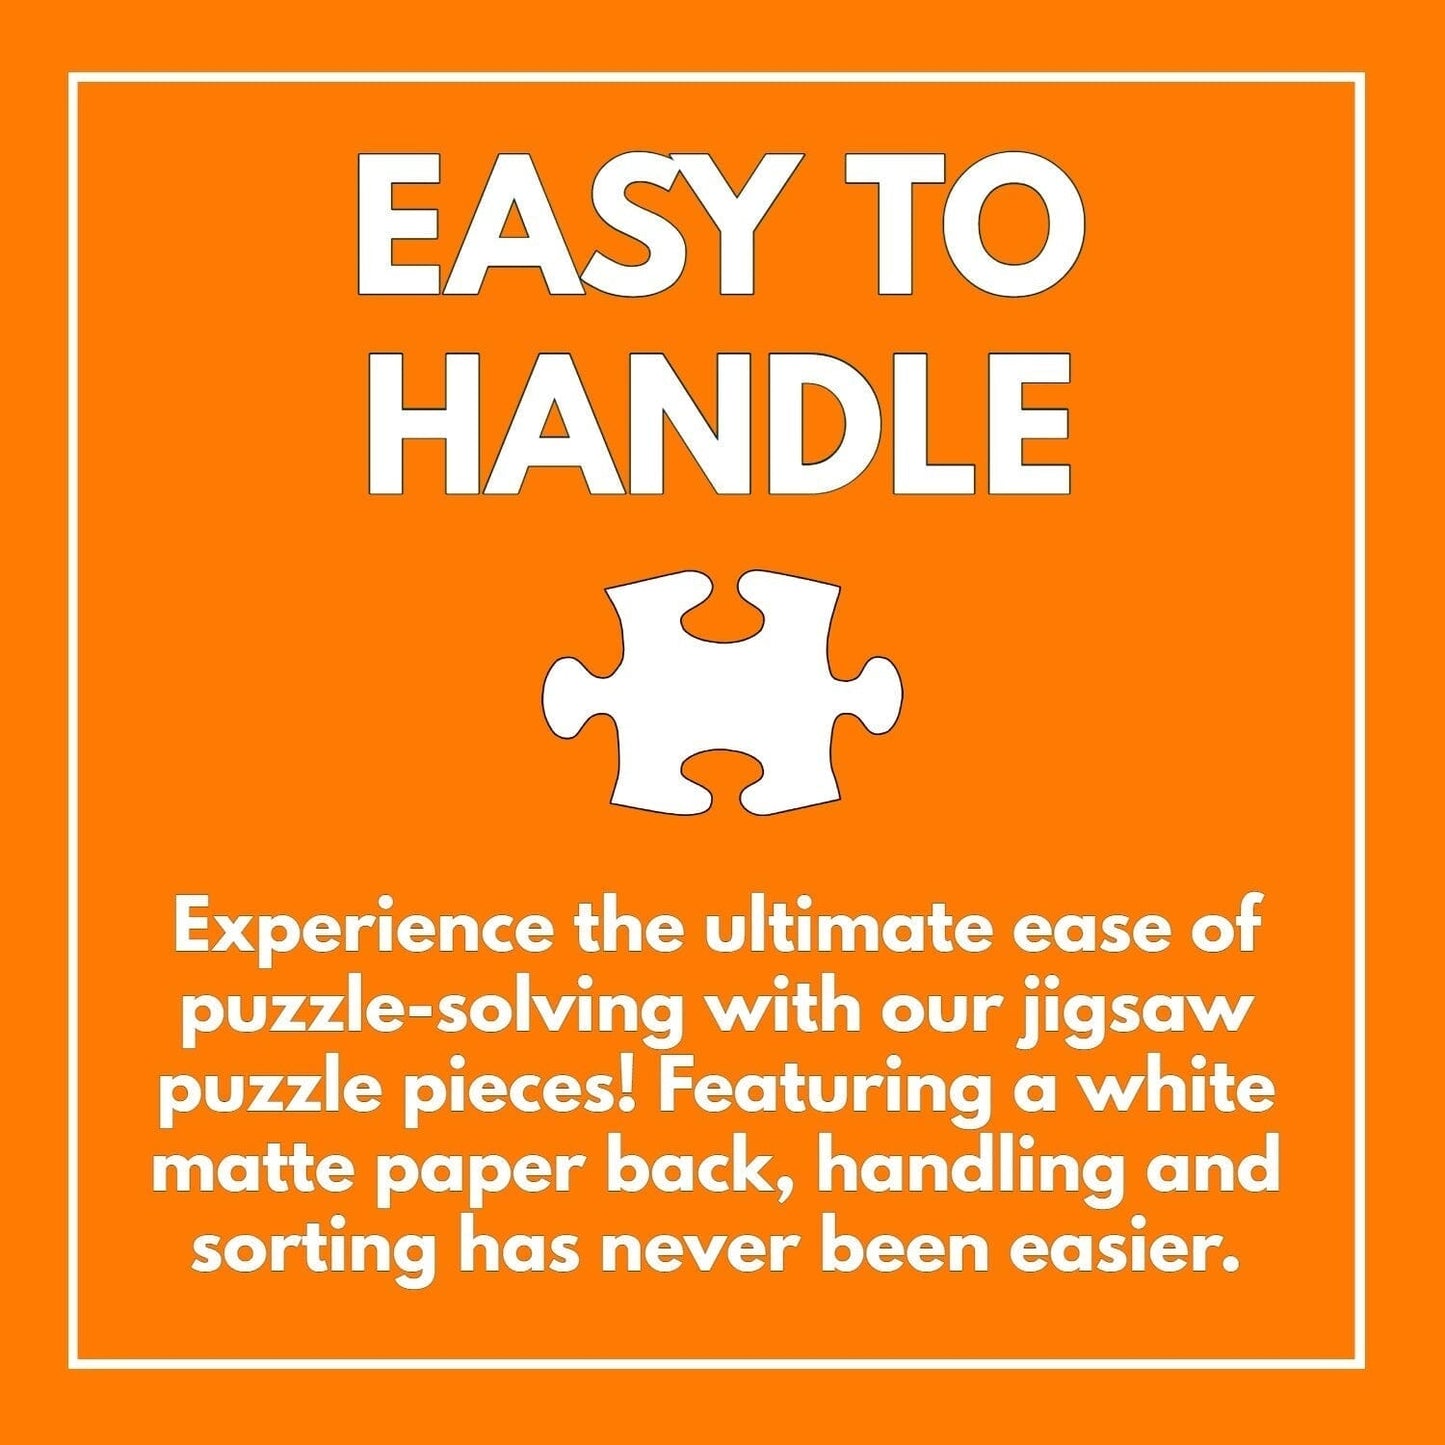 Starlit Tulip Soiree - 1000 Piece Jigsaw Puzzle Jigsaw Puzzles Cross & Glory